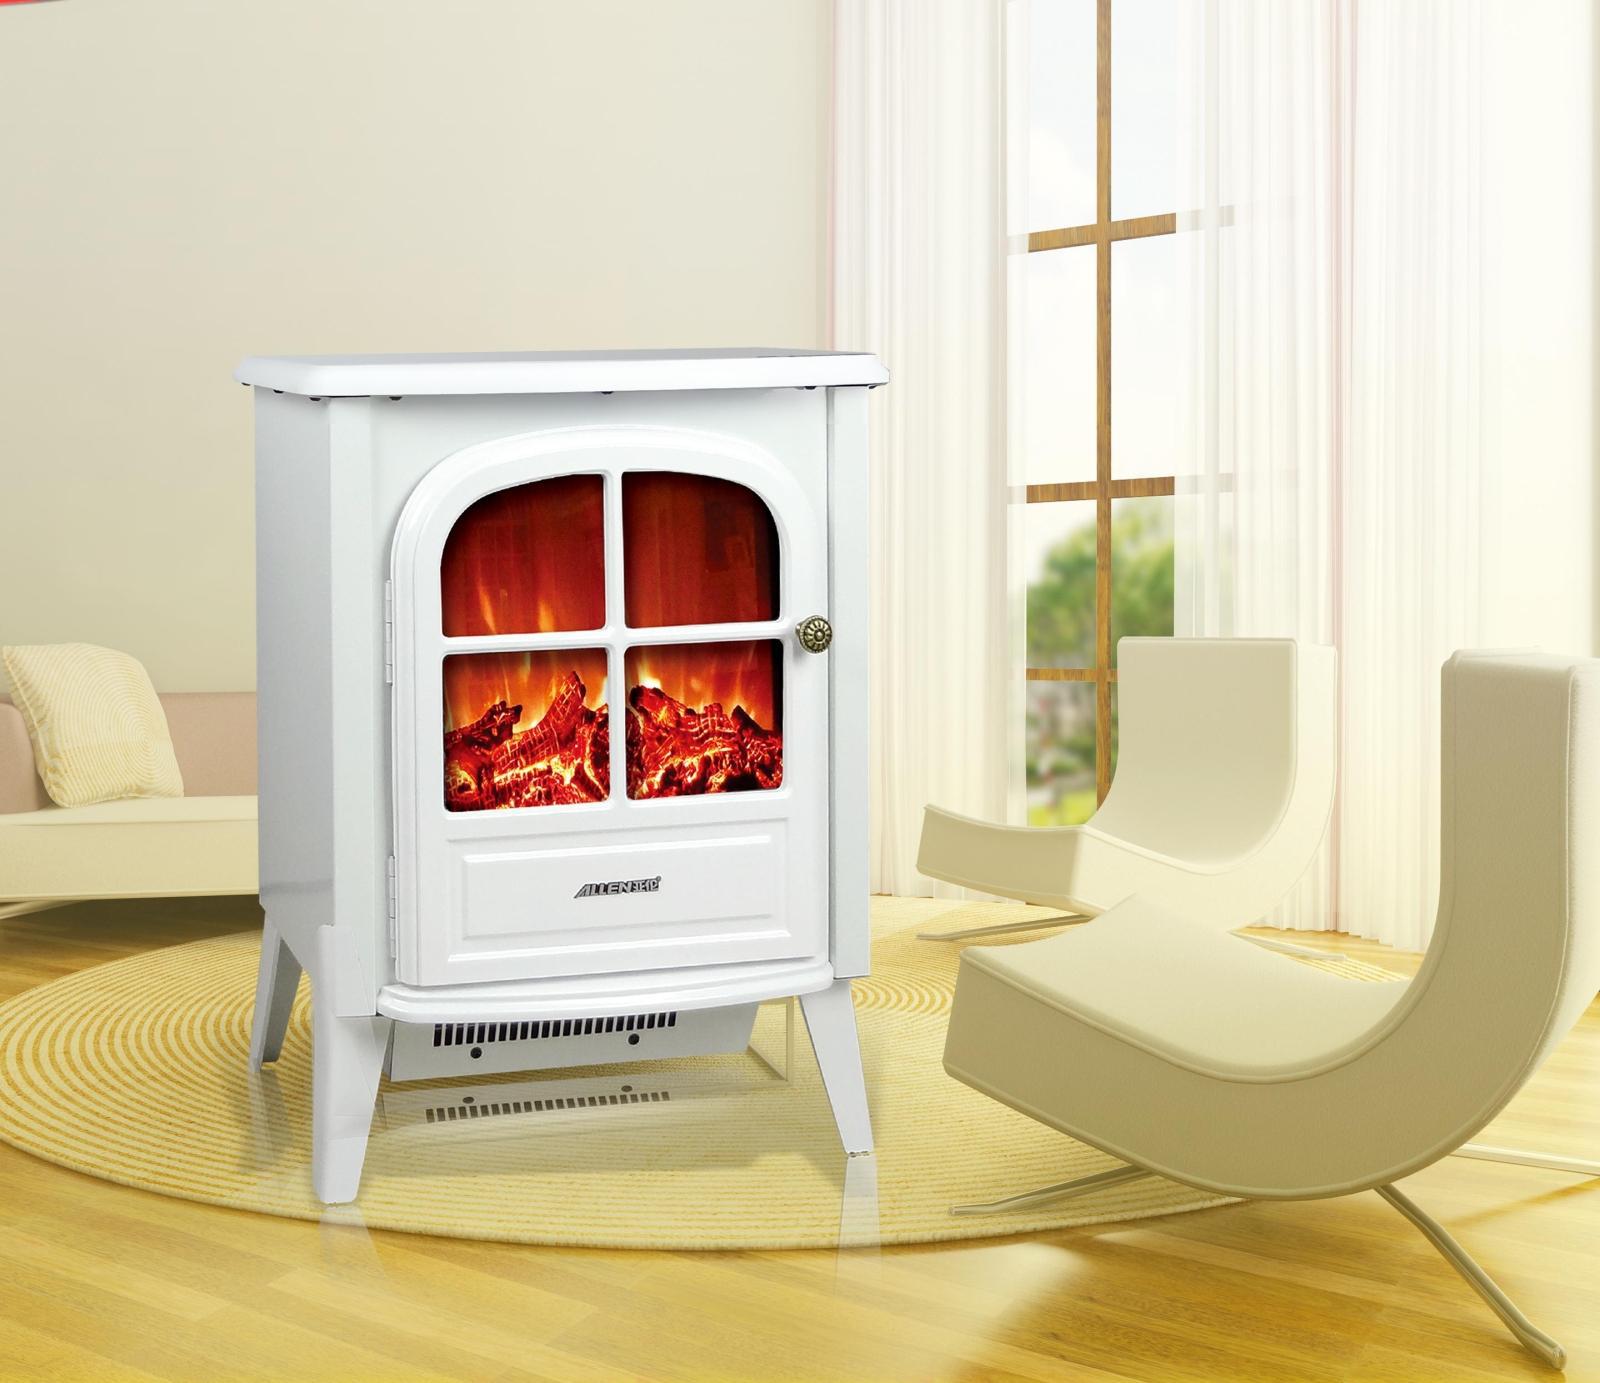 Aaron EA1105 electric fireplace heater household vertical electric heater portable electric heater1